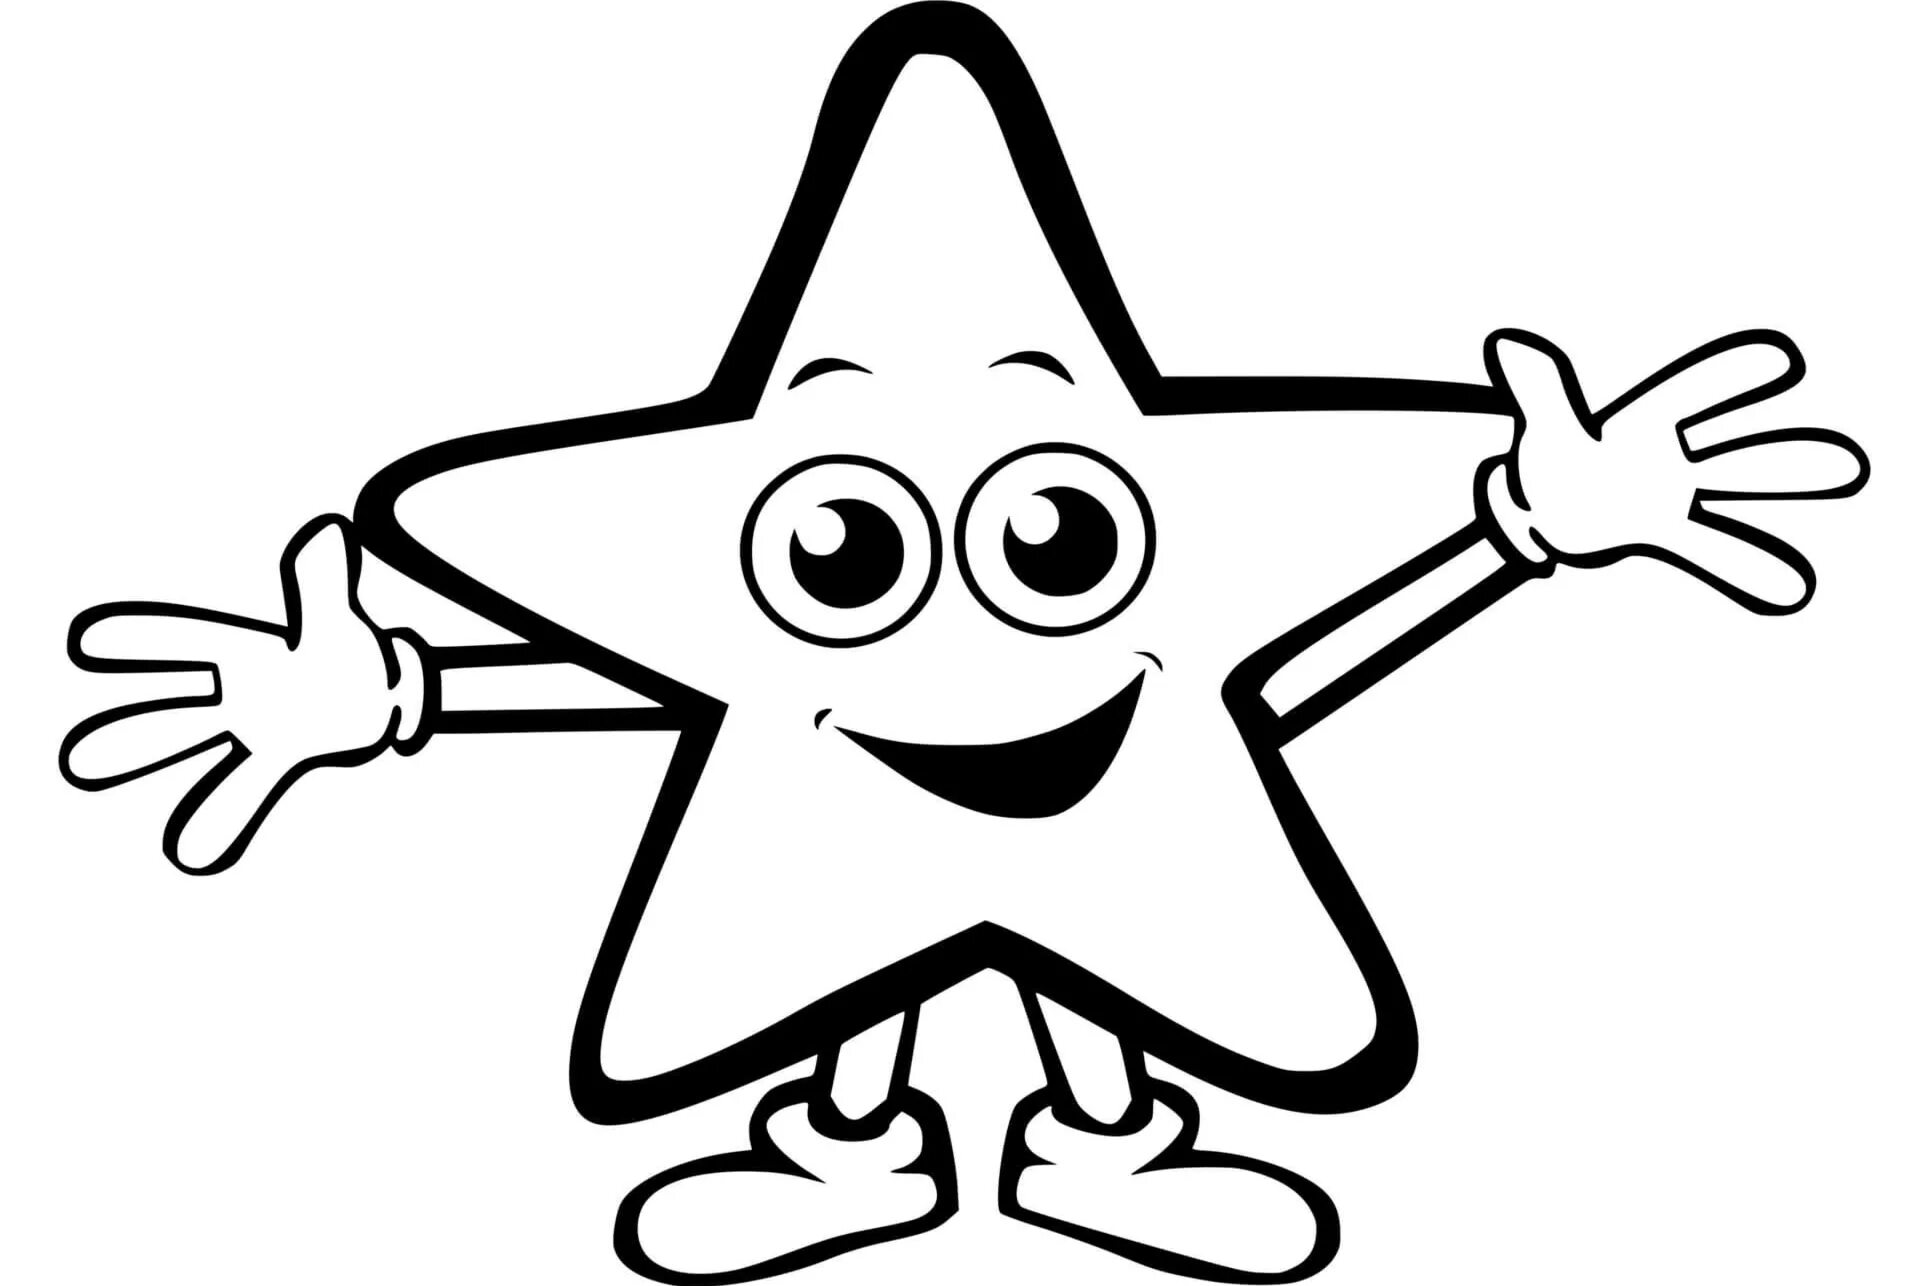 Preschool star #1